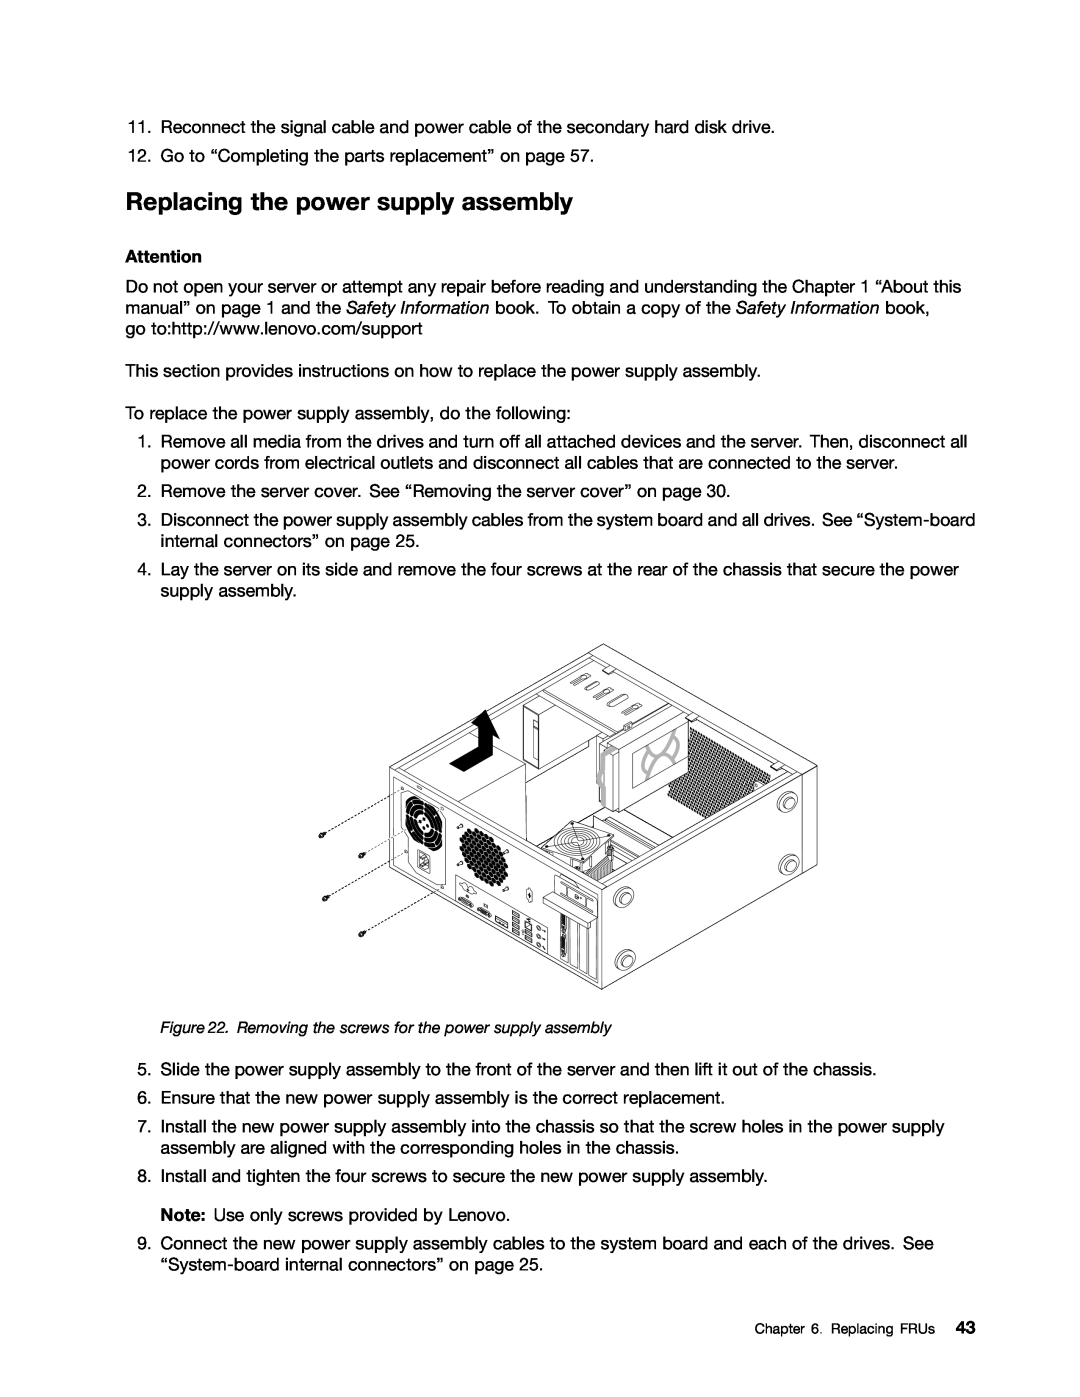 Lenovo 981, 992, 1008, 1010 manual Replacing the power supply assembly, Removing the screws for the power supply assembly 